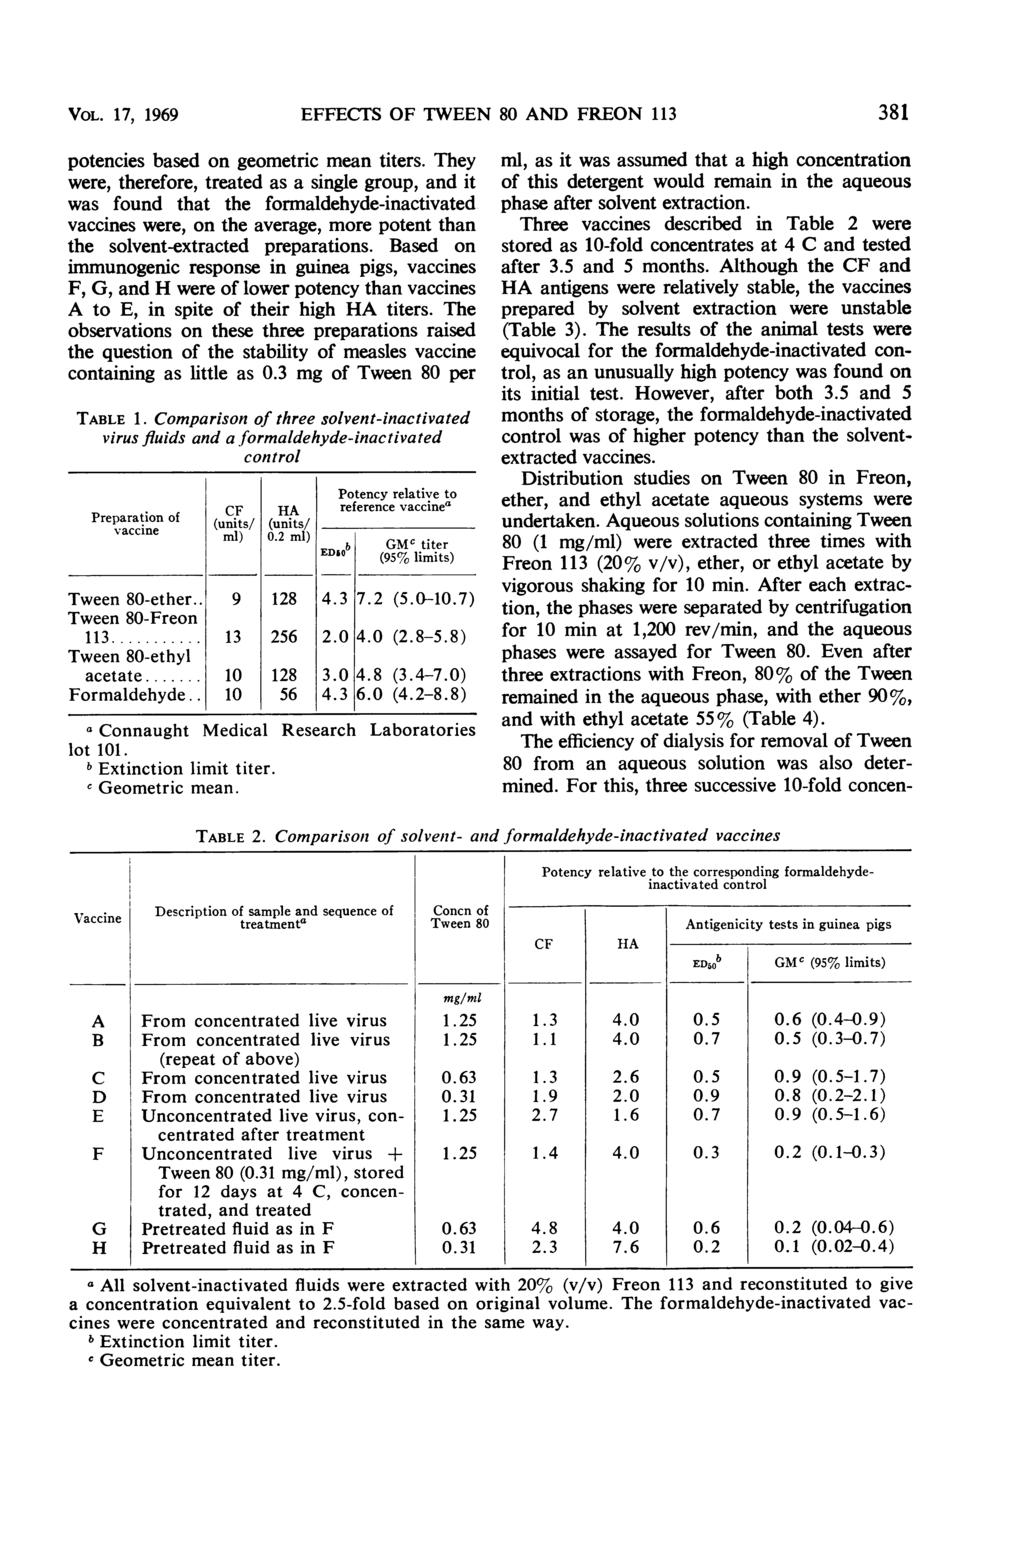 VOL. 17, 1969 potencies based on geometric mean titers.